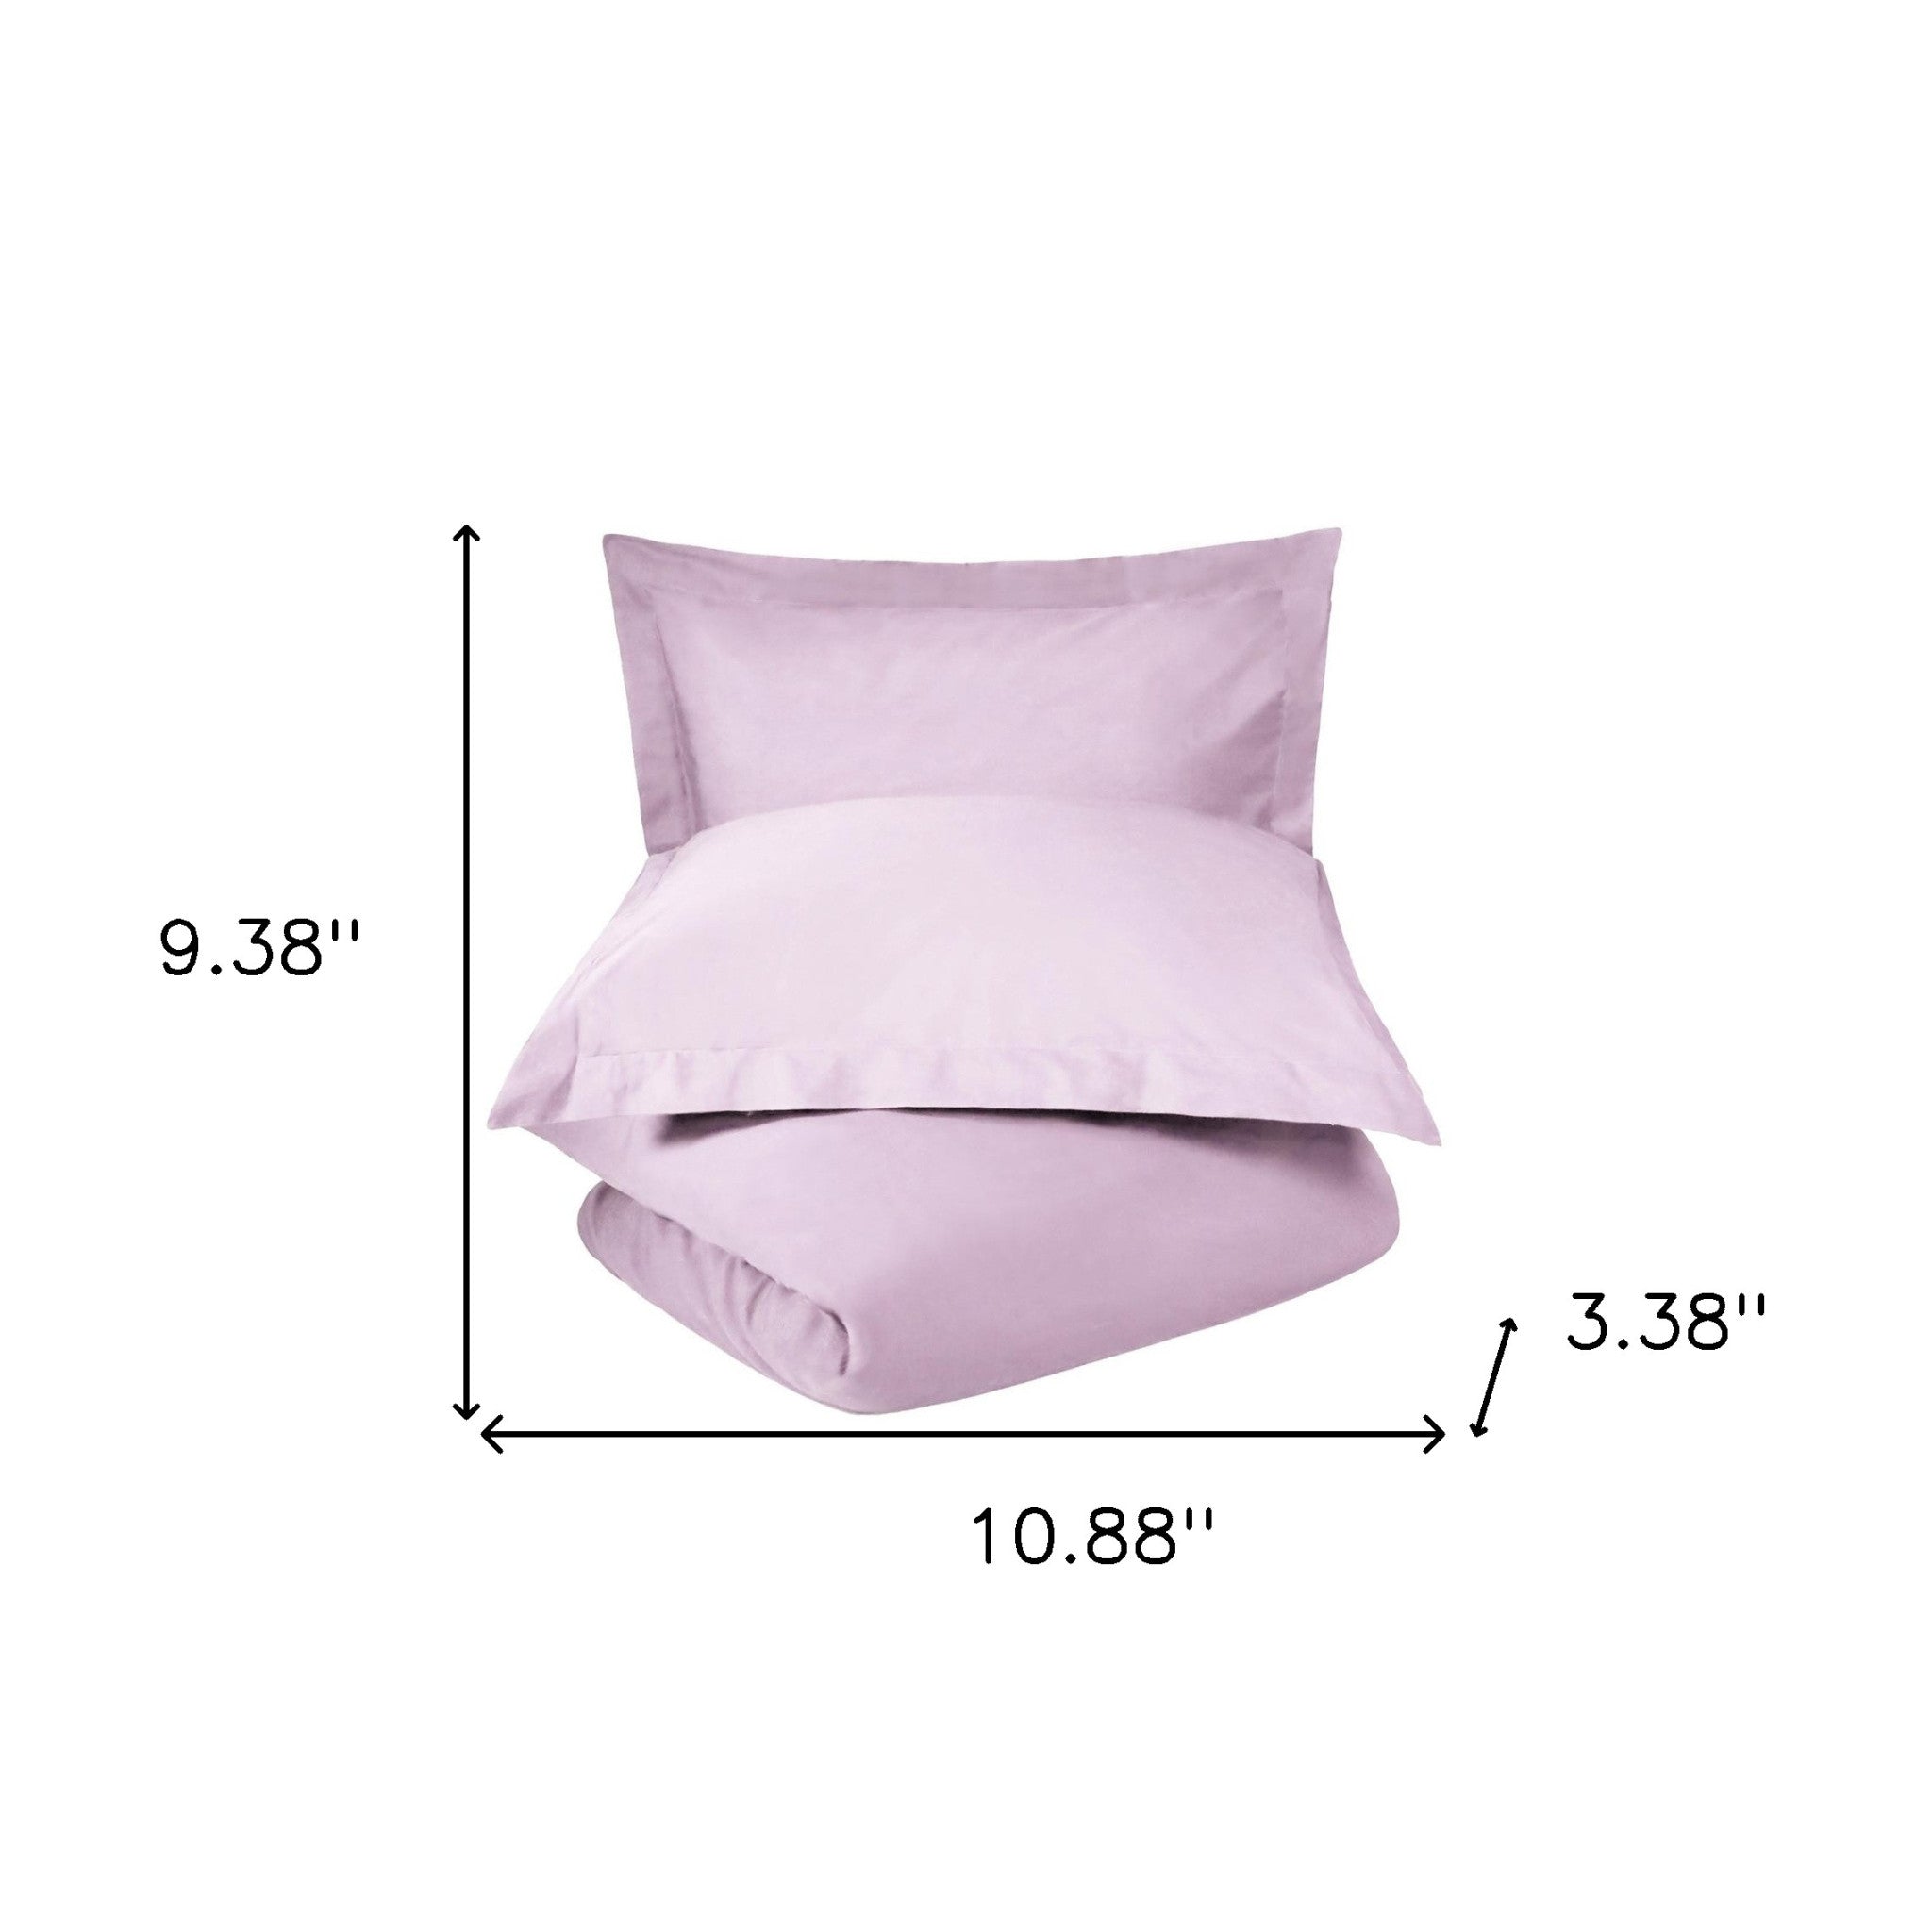 Lilac Queen 100% Cotton 300 Thread Count Washable Duvet Cover Set